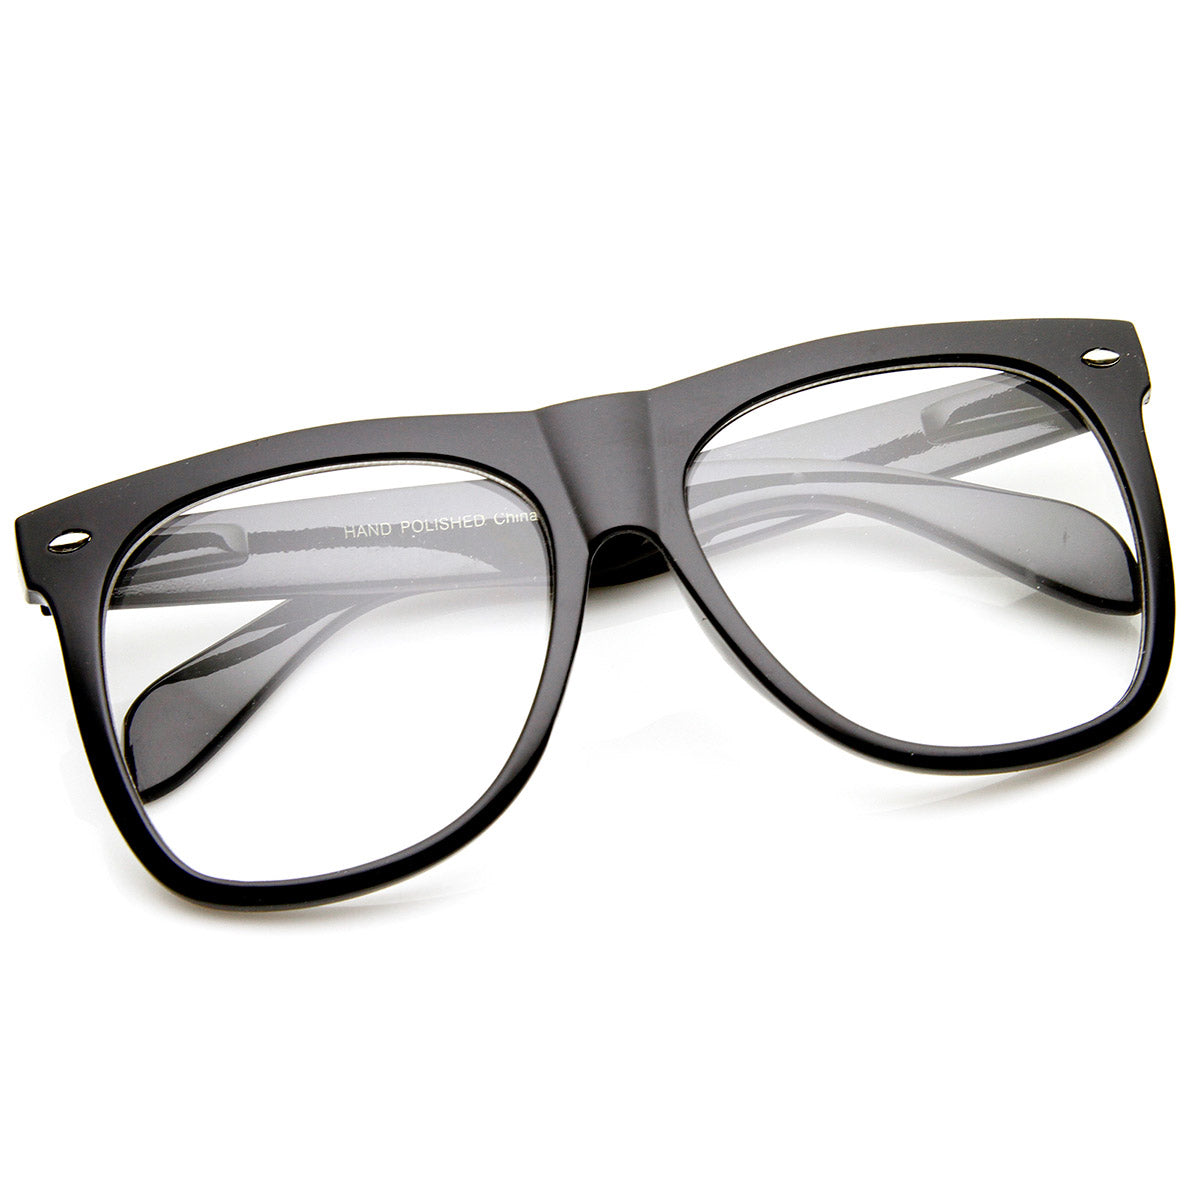 Mens Tempered Glass Lens Classic Oversize Sport Horn Rim Sunglasses Shiny  Black Green 